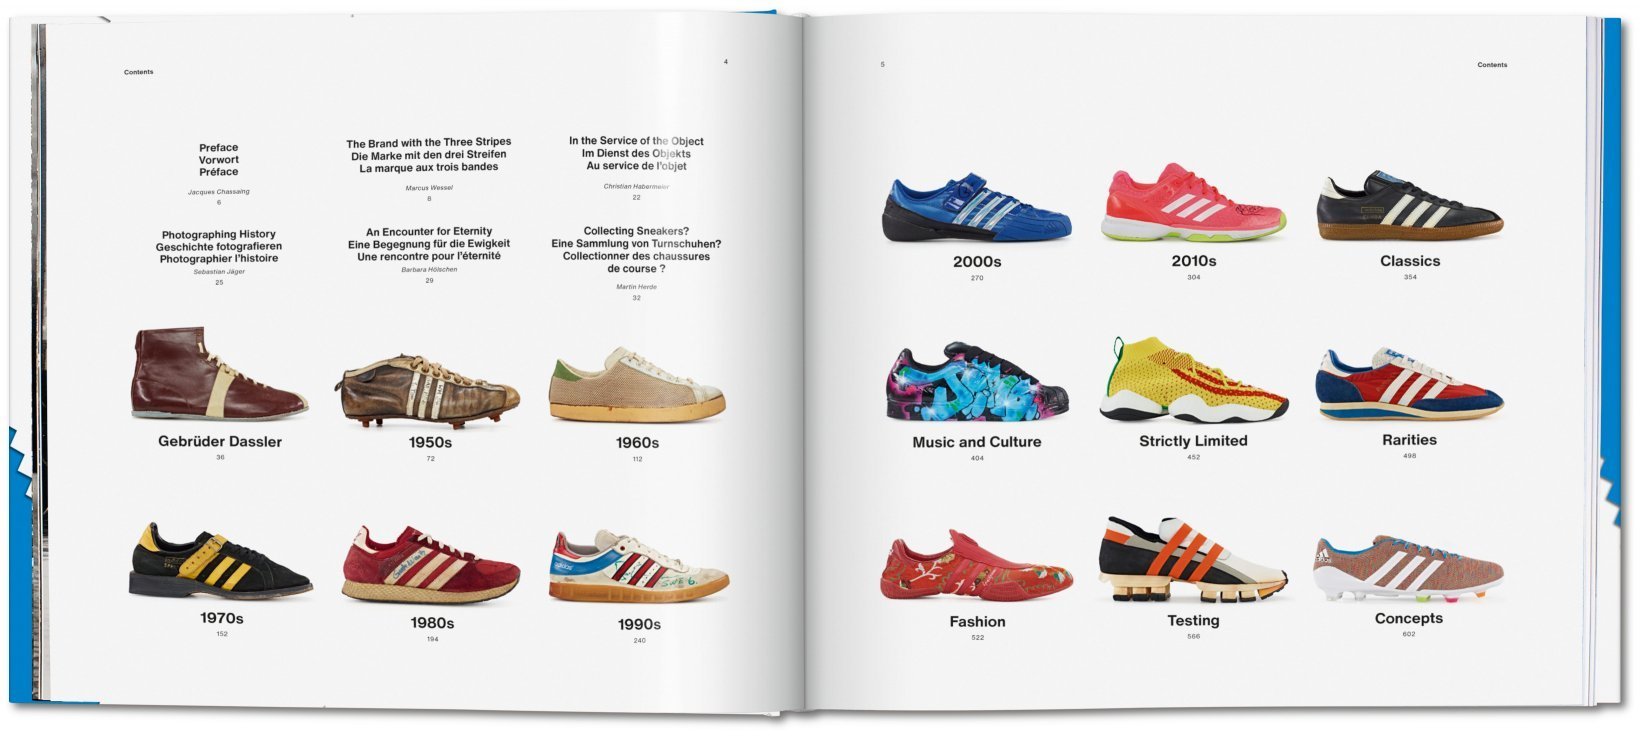 Sostener Instalar en pc explosión Three-Stripe Thrills: The history of the adidas shoe, from its earliest  beginnings until today | Papercut